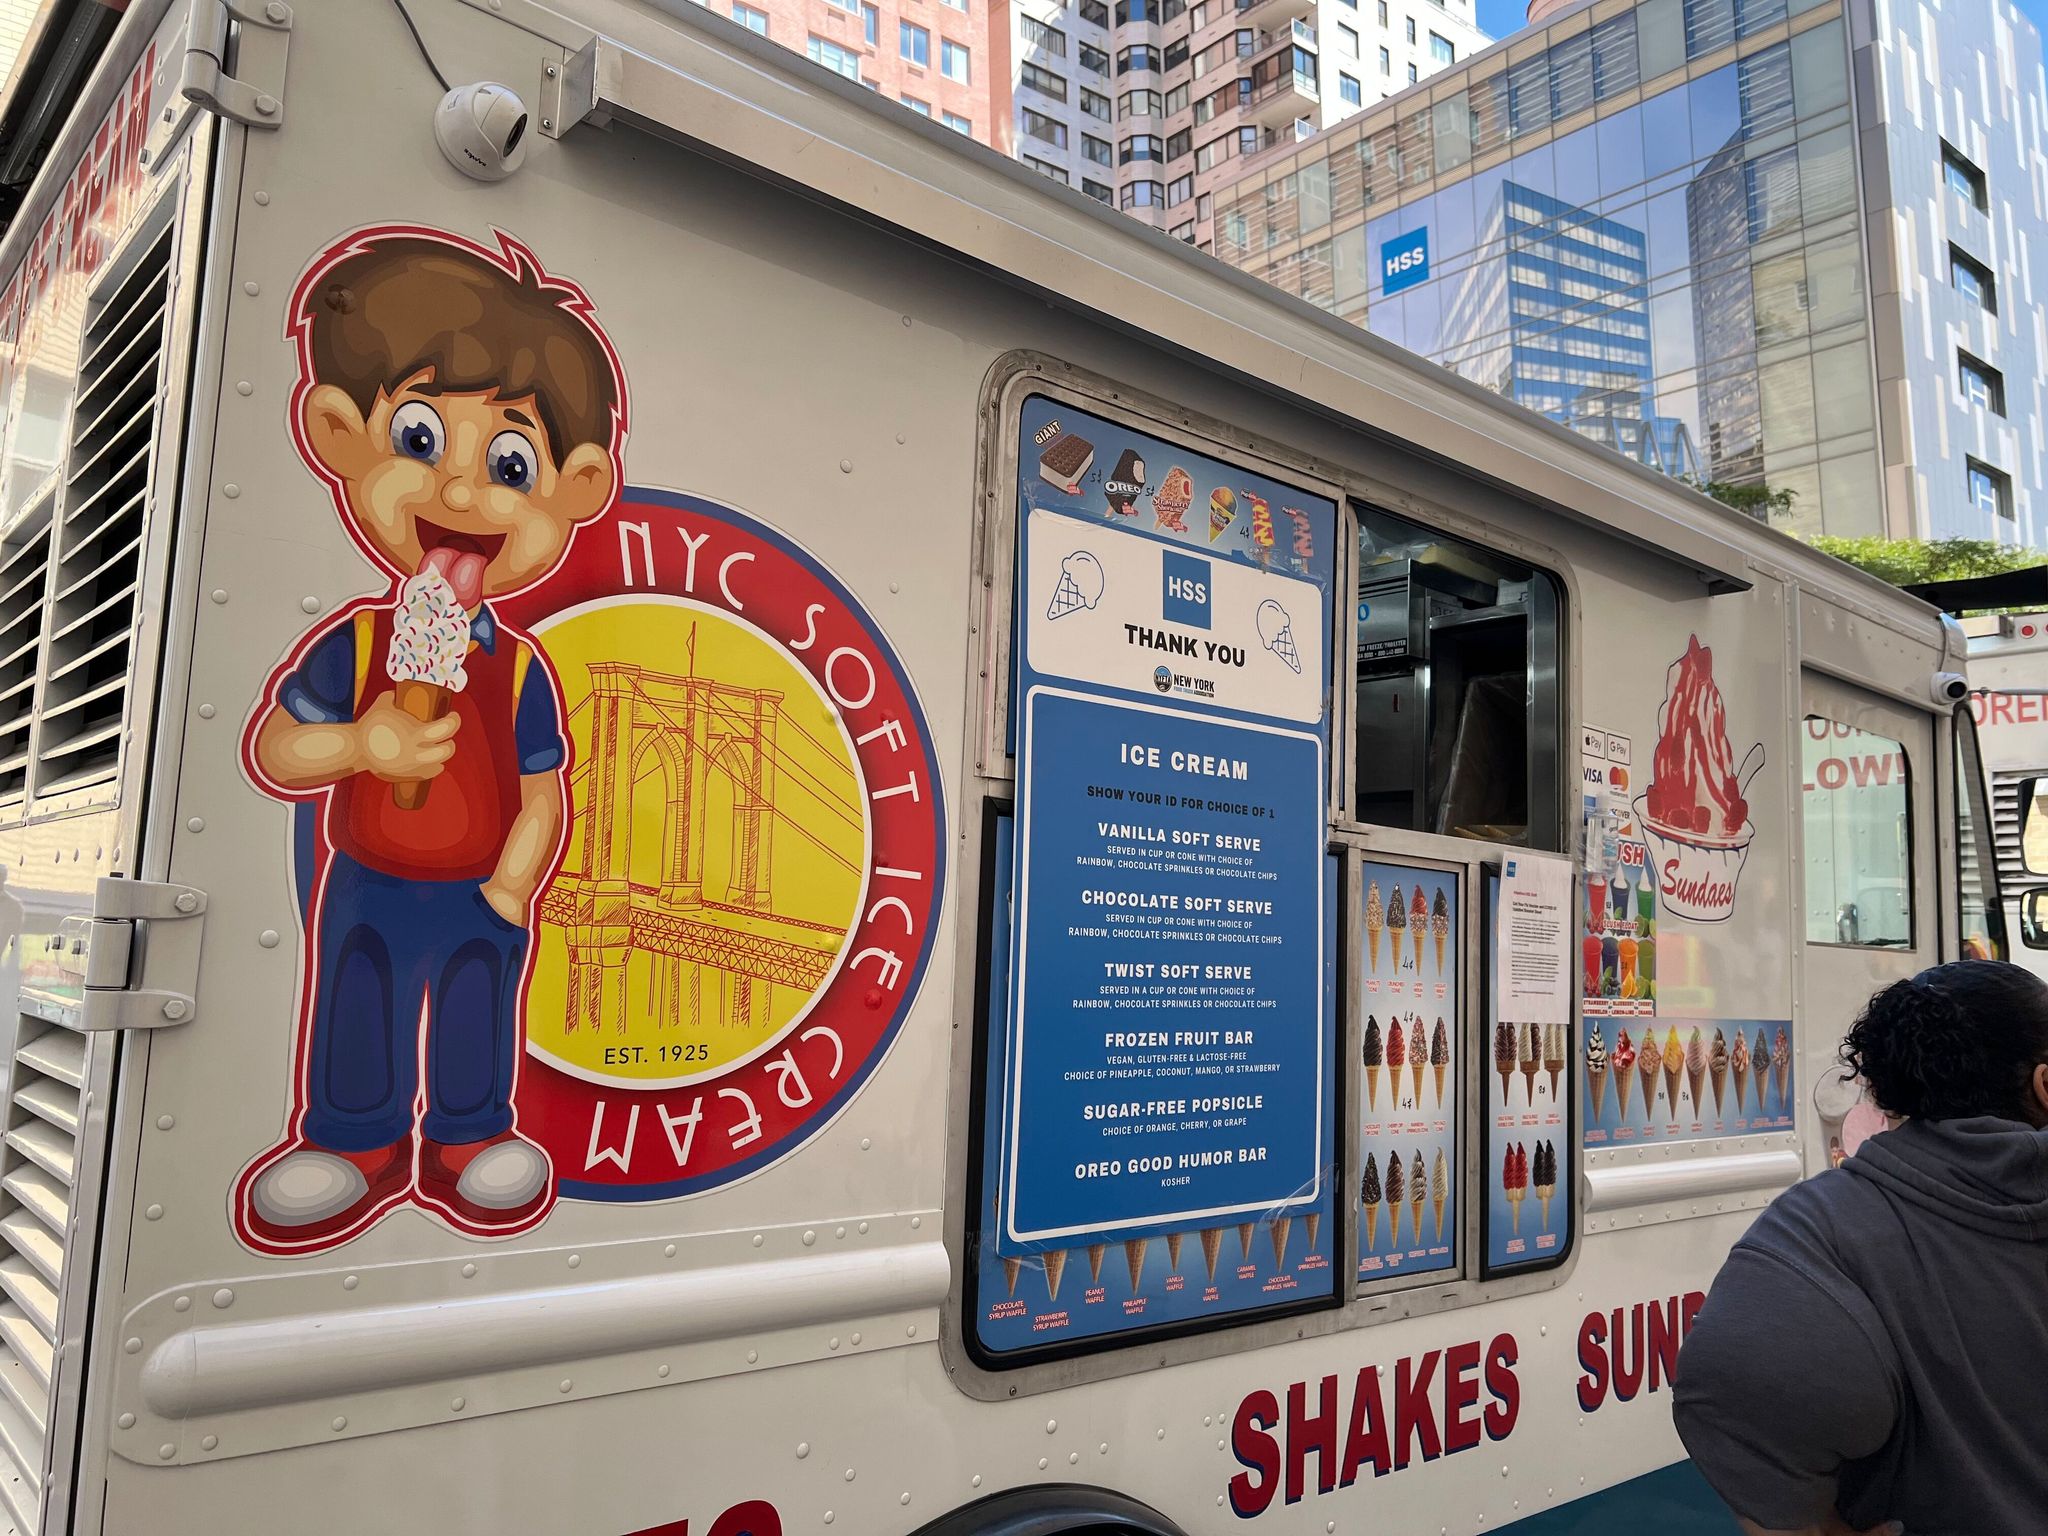 NYC Soft ice cream truck